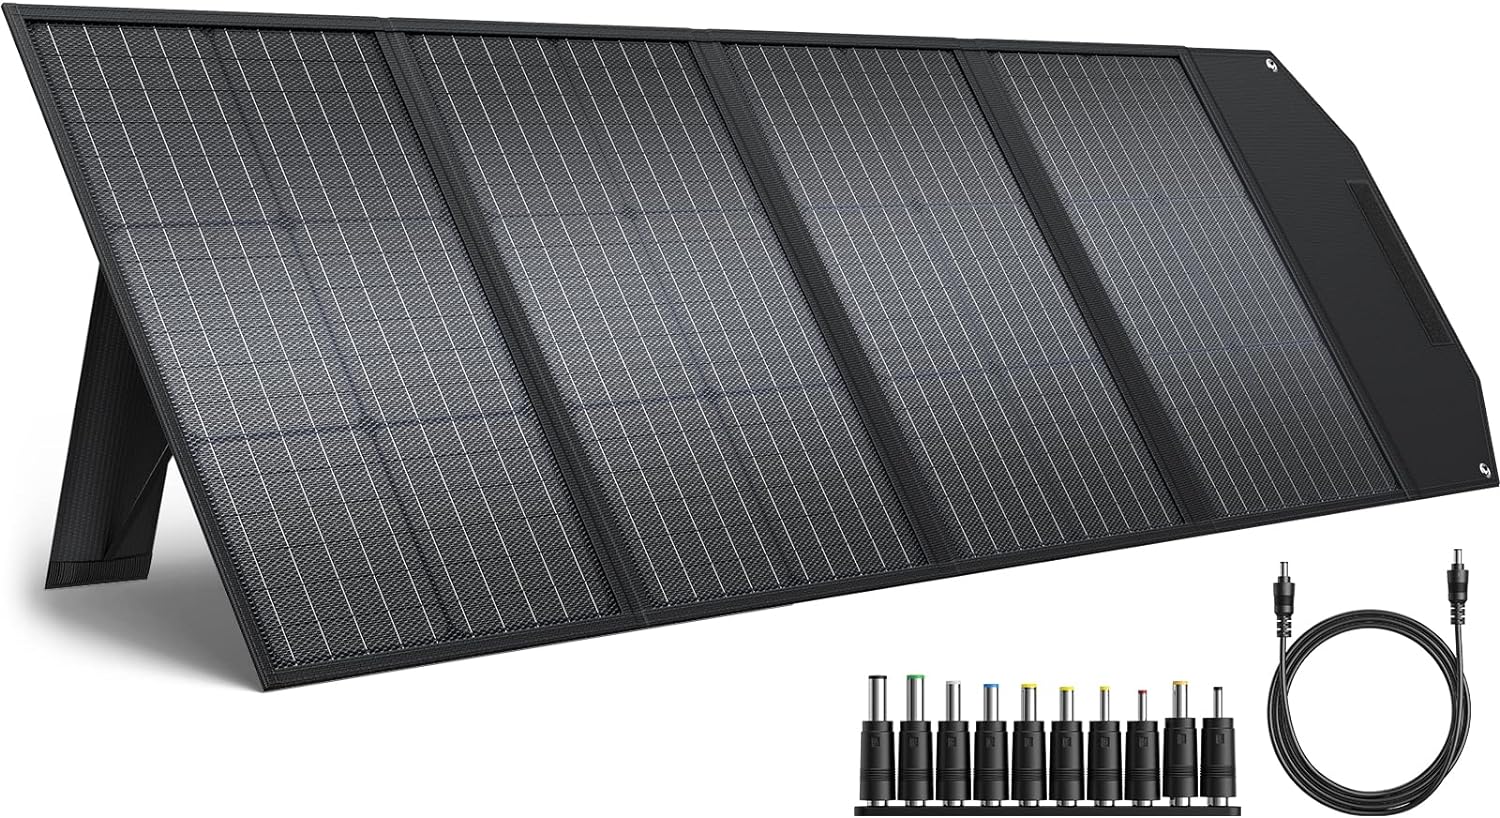 BROWEY 120W Solar Panel Review